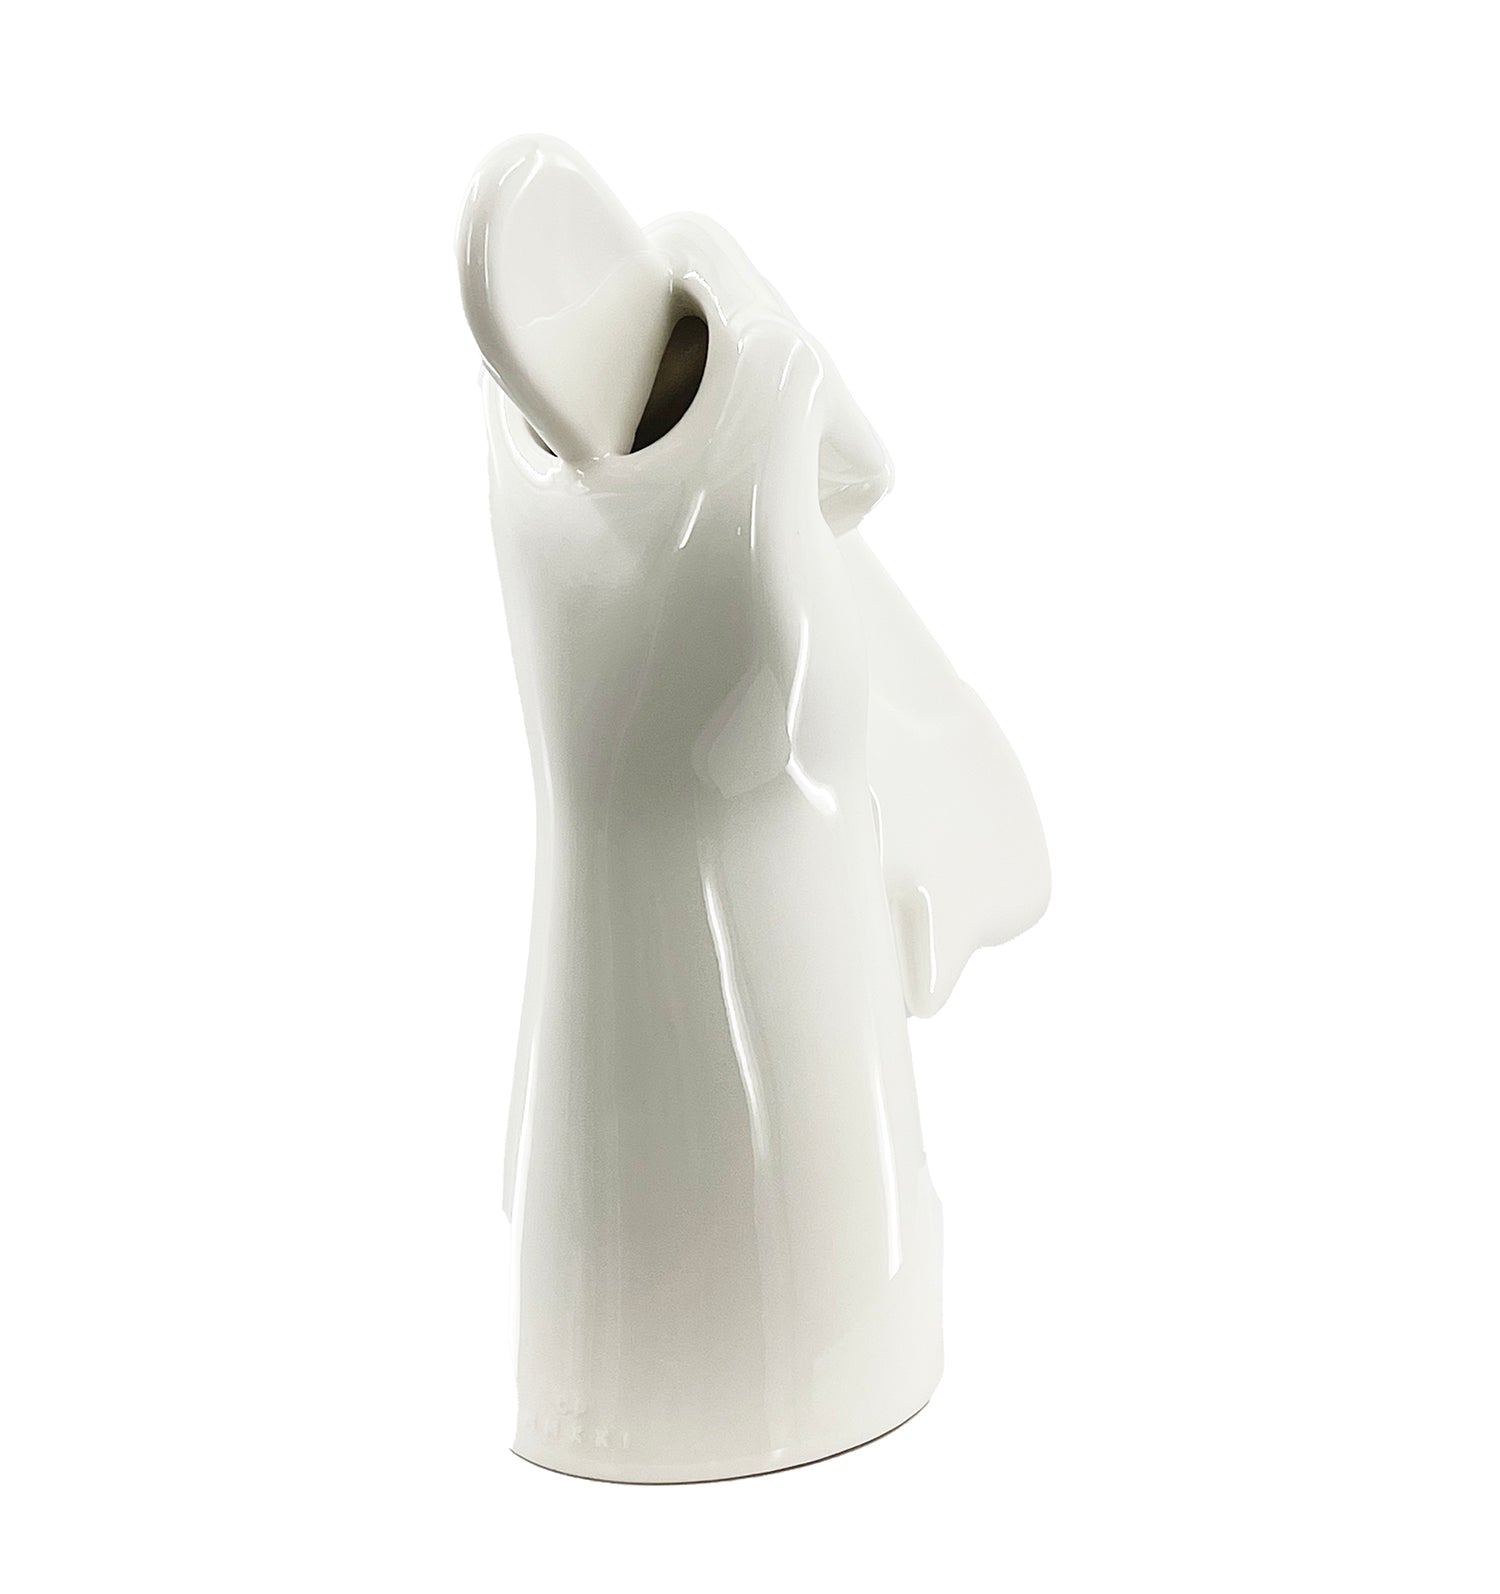 CLEON PETERSON 'Live to Kill Hand' Ceramic Art Vase | Signari Gallery